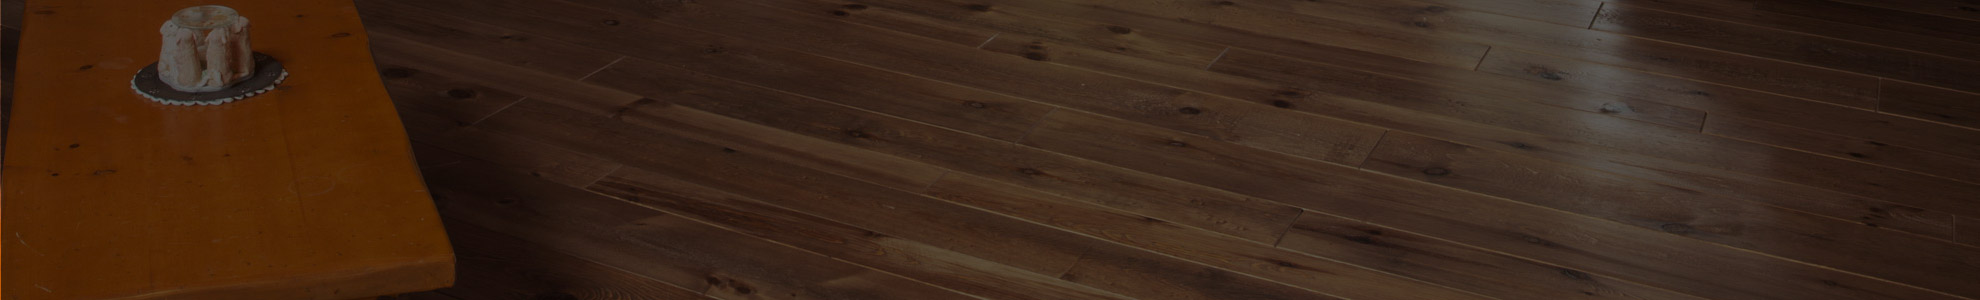 Pine Flooring Installation Rustic Pine Flooring